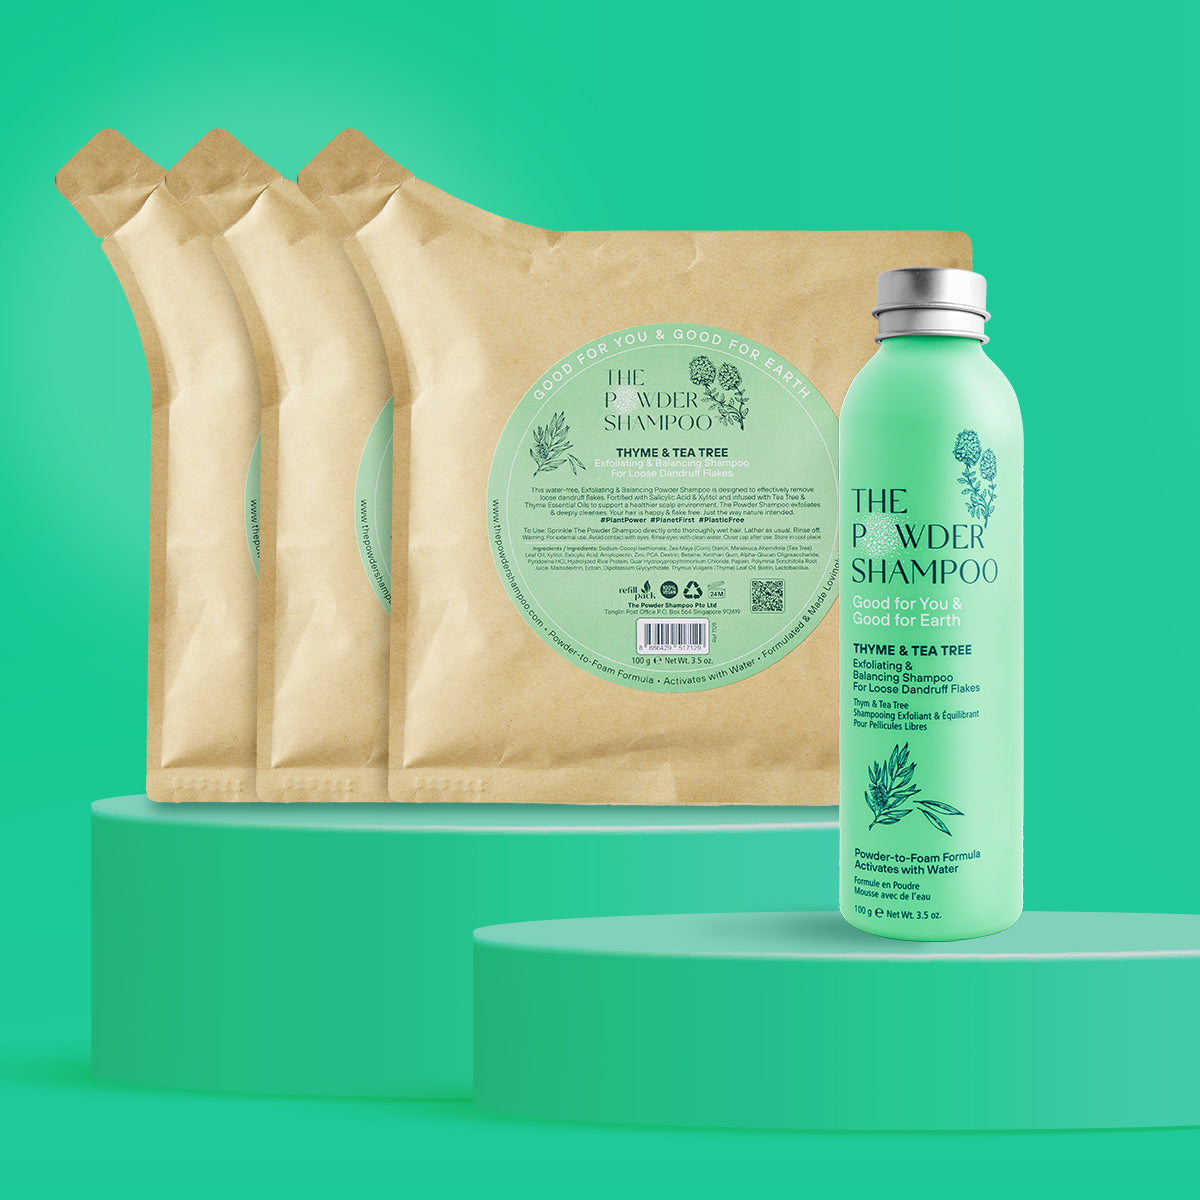 One Year's Supply - Exfoliating & Balancing Powder Shampoo For Loose Dandruff Flakes